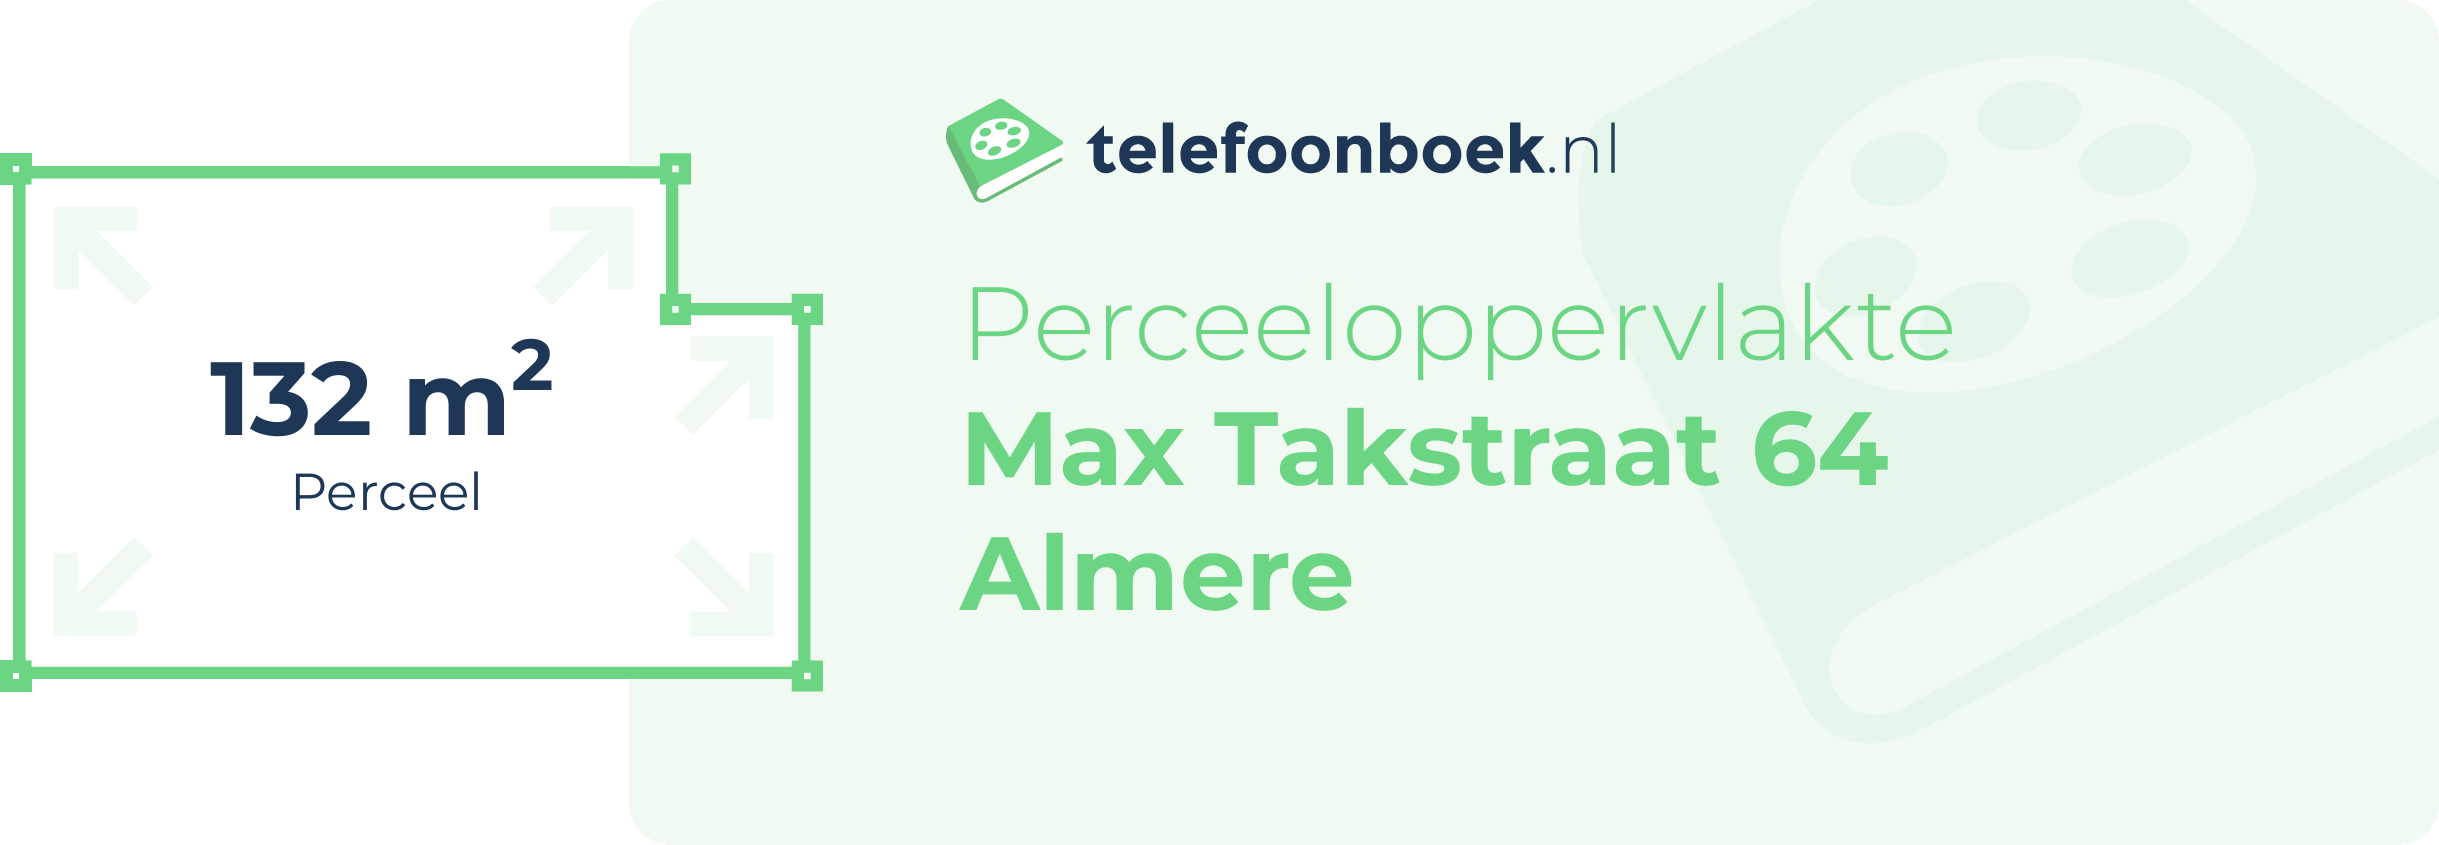 Perceeloppervlakte Max Takstraat 64 Almere